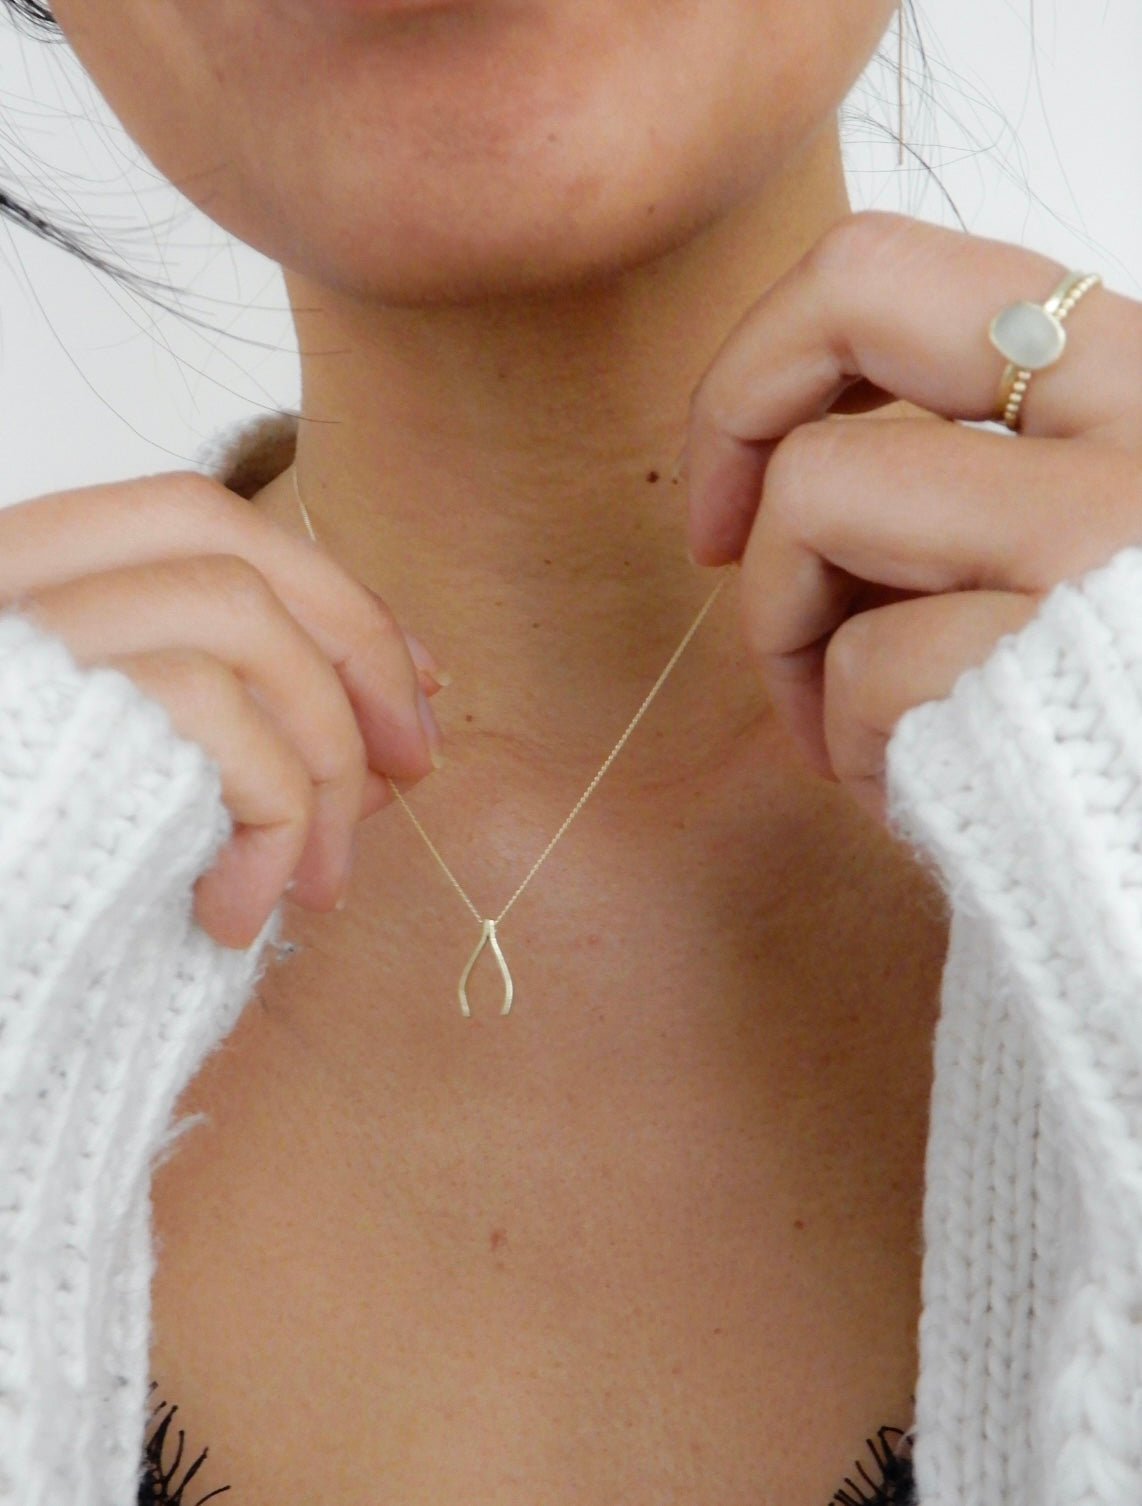 Necklace | The golden wishbone